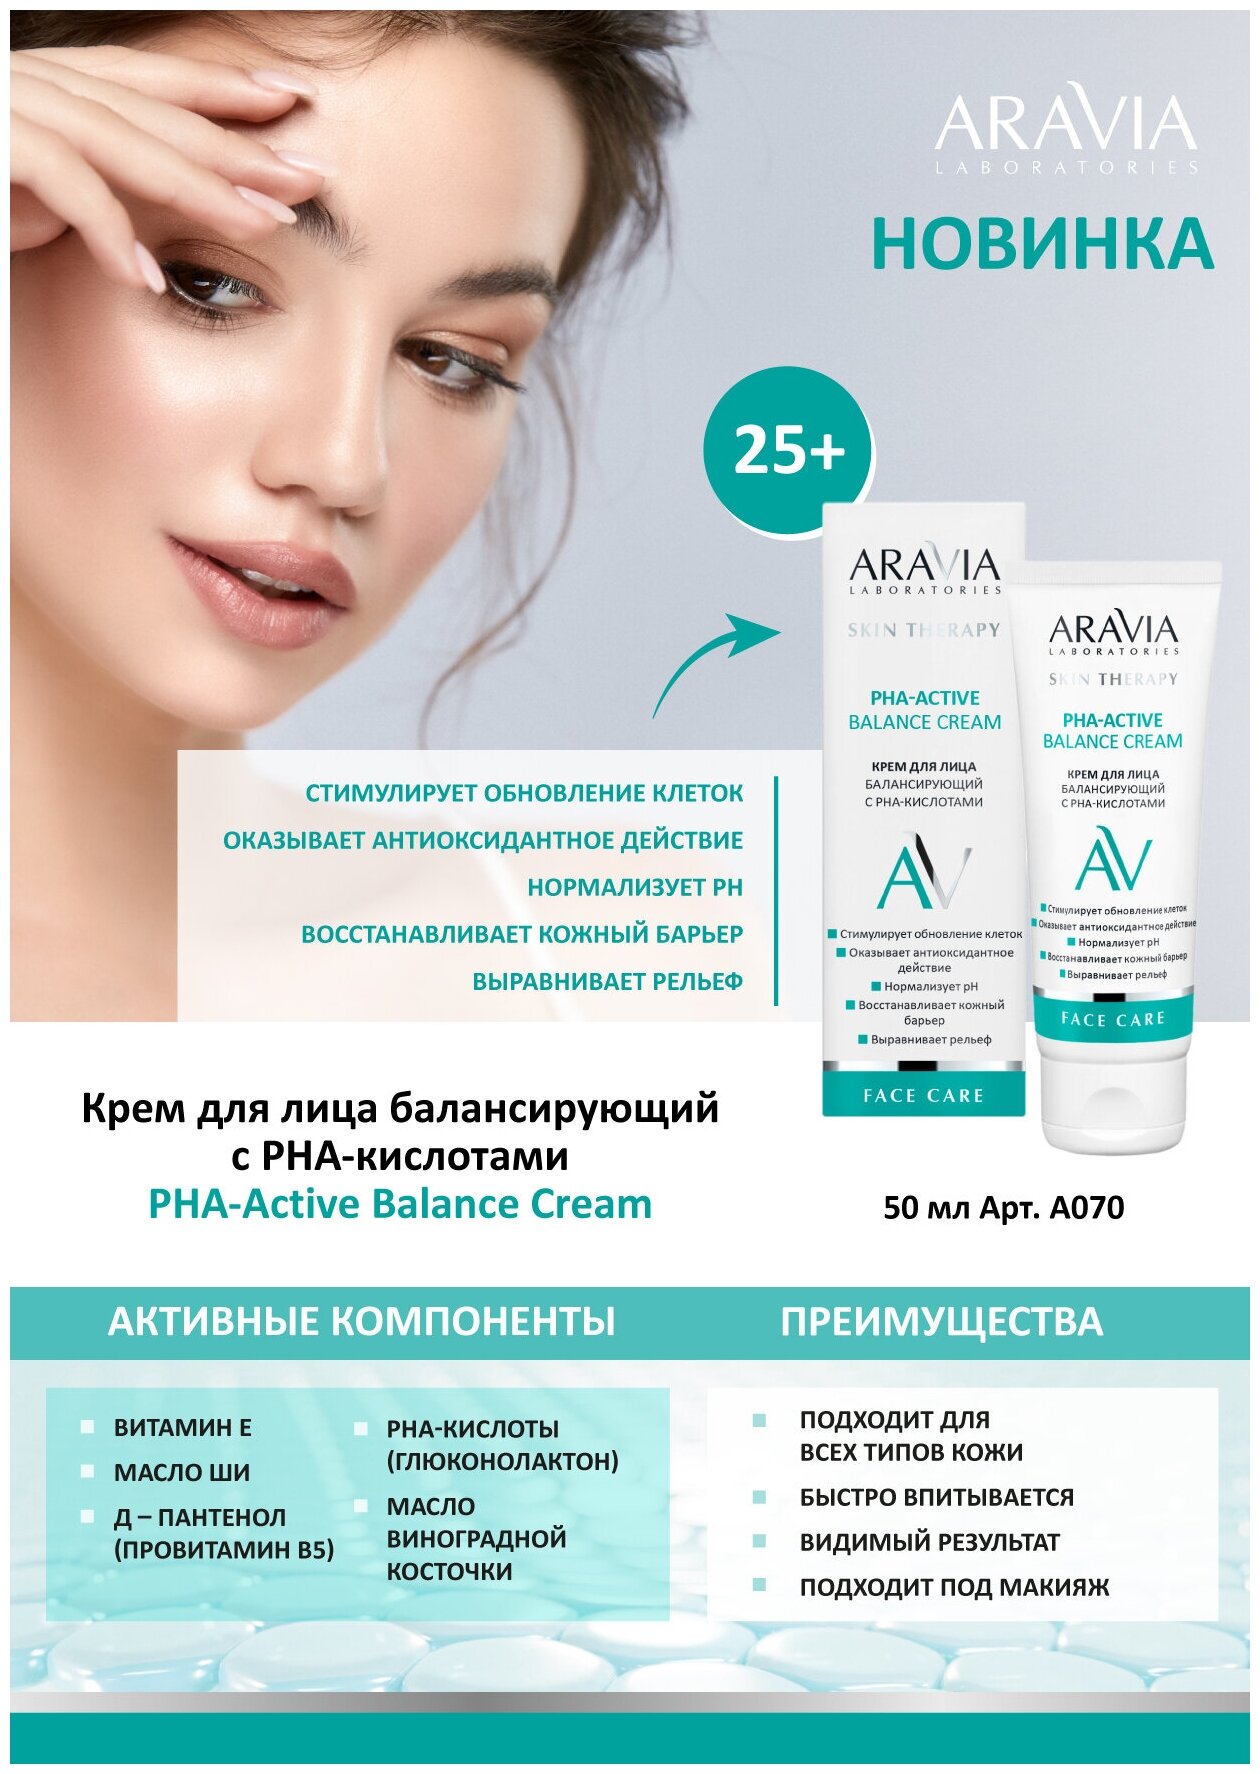 Крем ARAVIA Laboratories для лица, балансирующий с PHA-кислотами PHA-Active Balance Cream, 50 мл